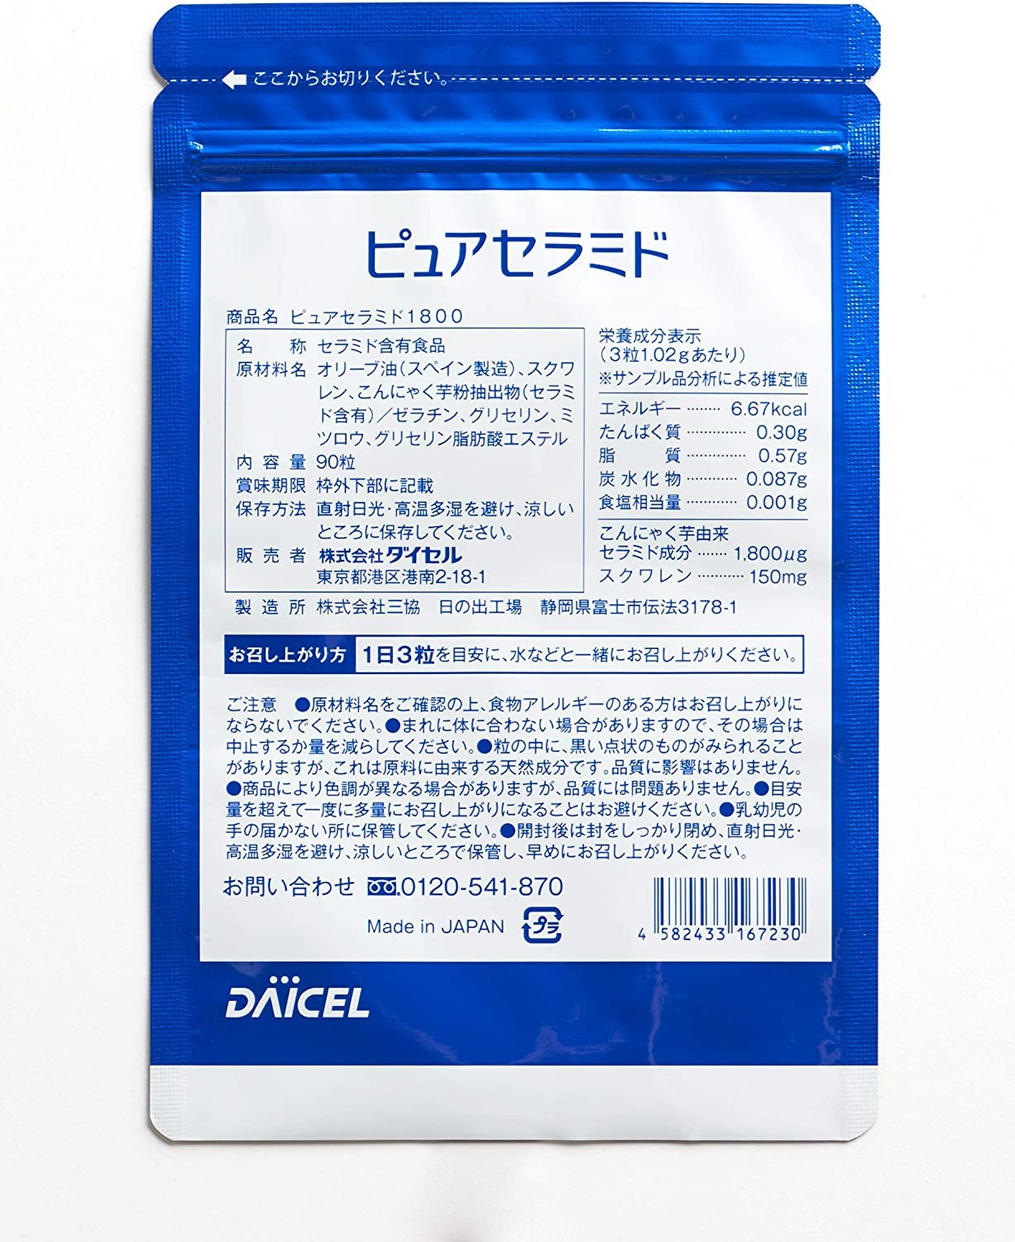 DAICEL(ダイセル) ピュアセラミドの商品画像サムネ2 